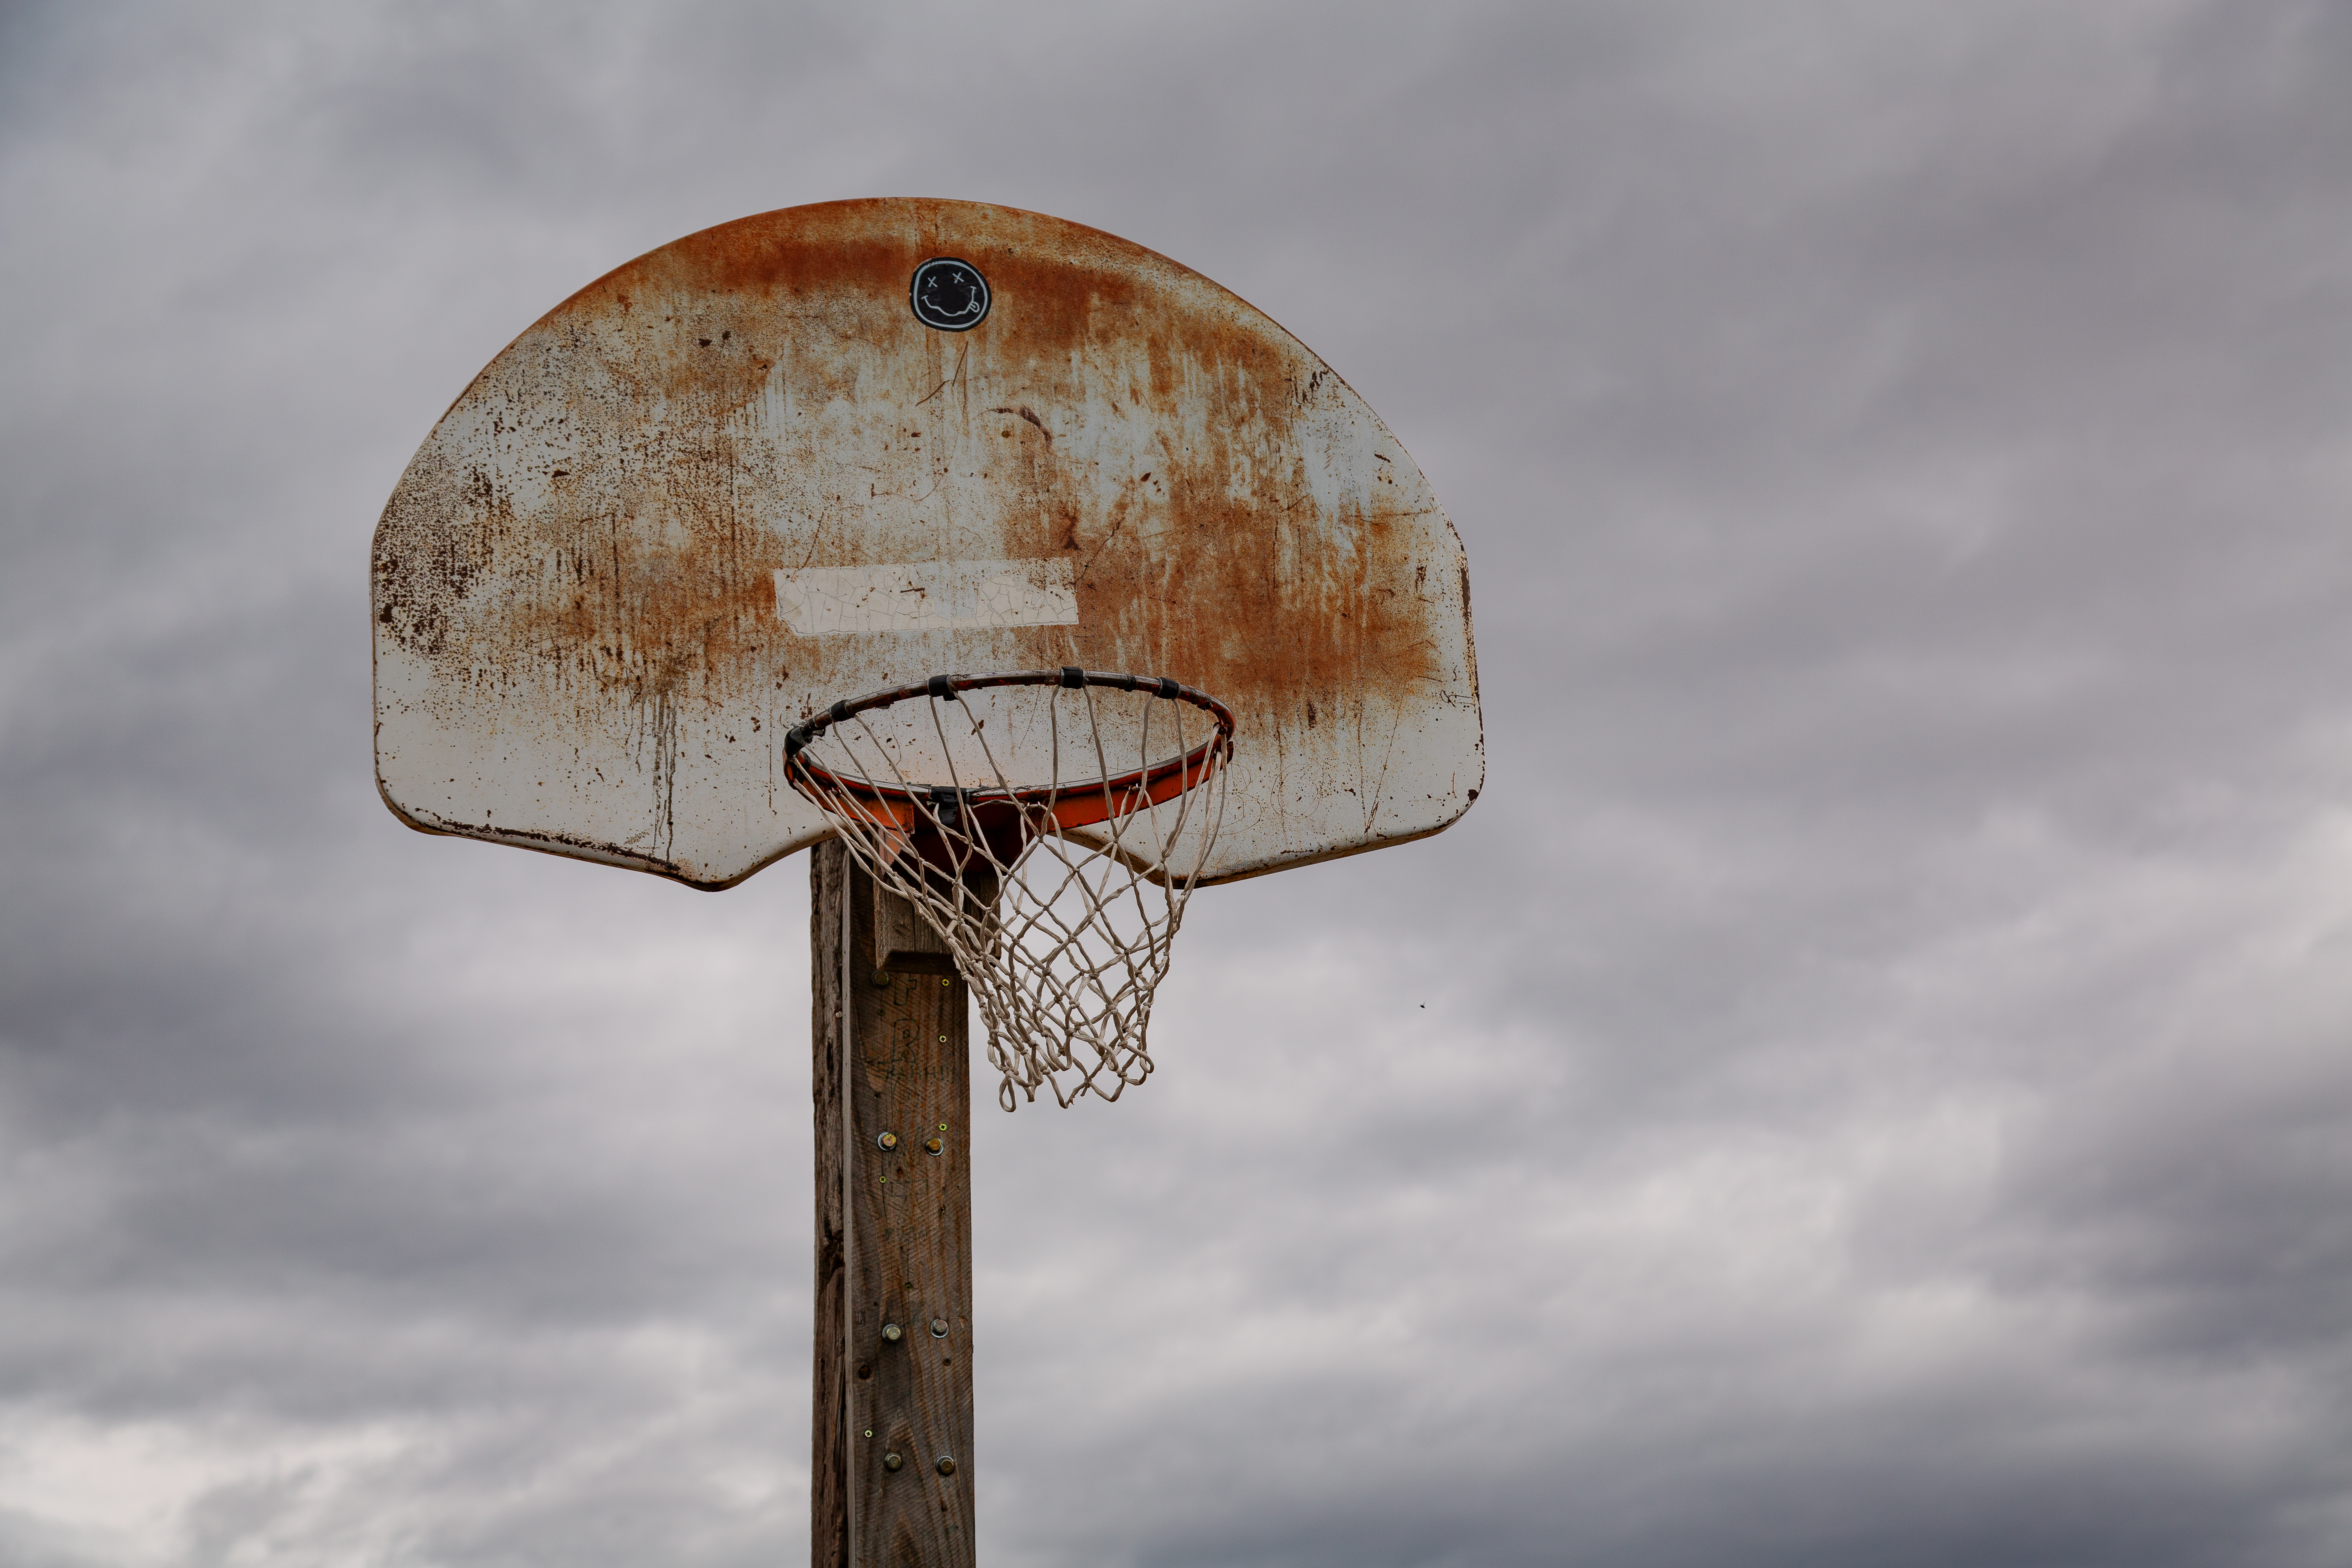 How To Assemble A Reebok Basketball Hoop?